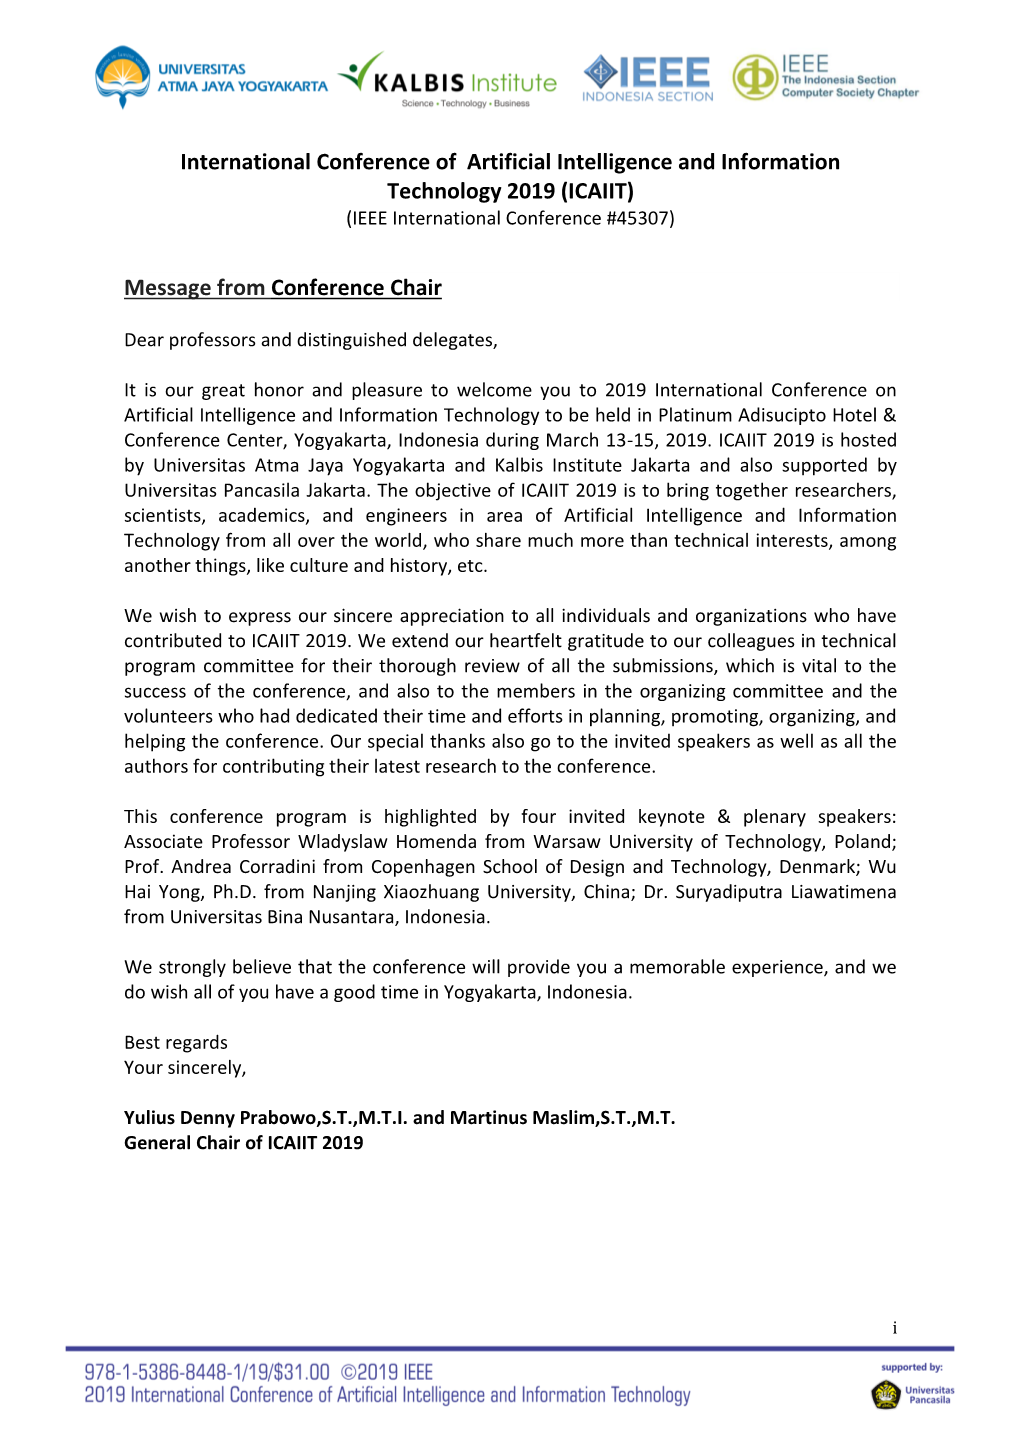 ICAIIT) (IEEE International Conference #45307)